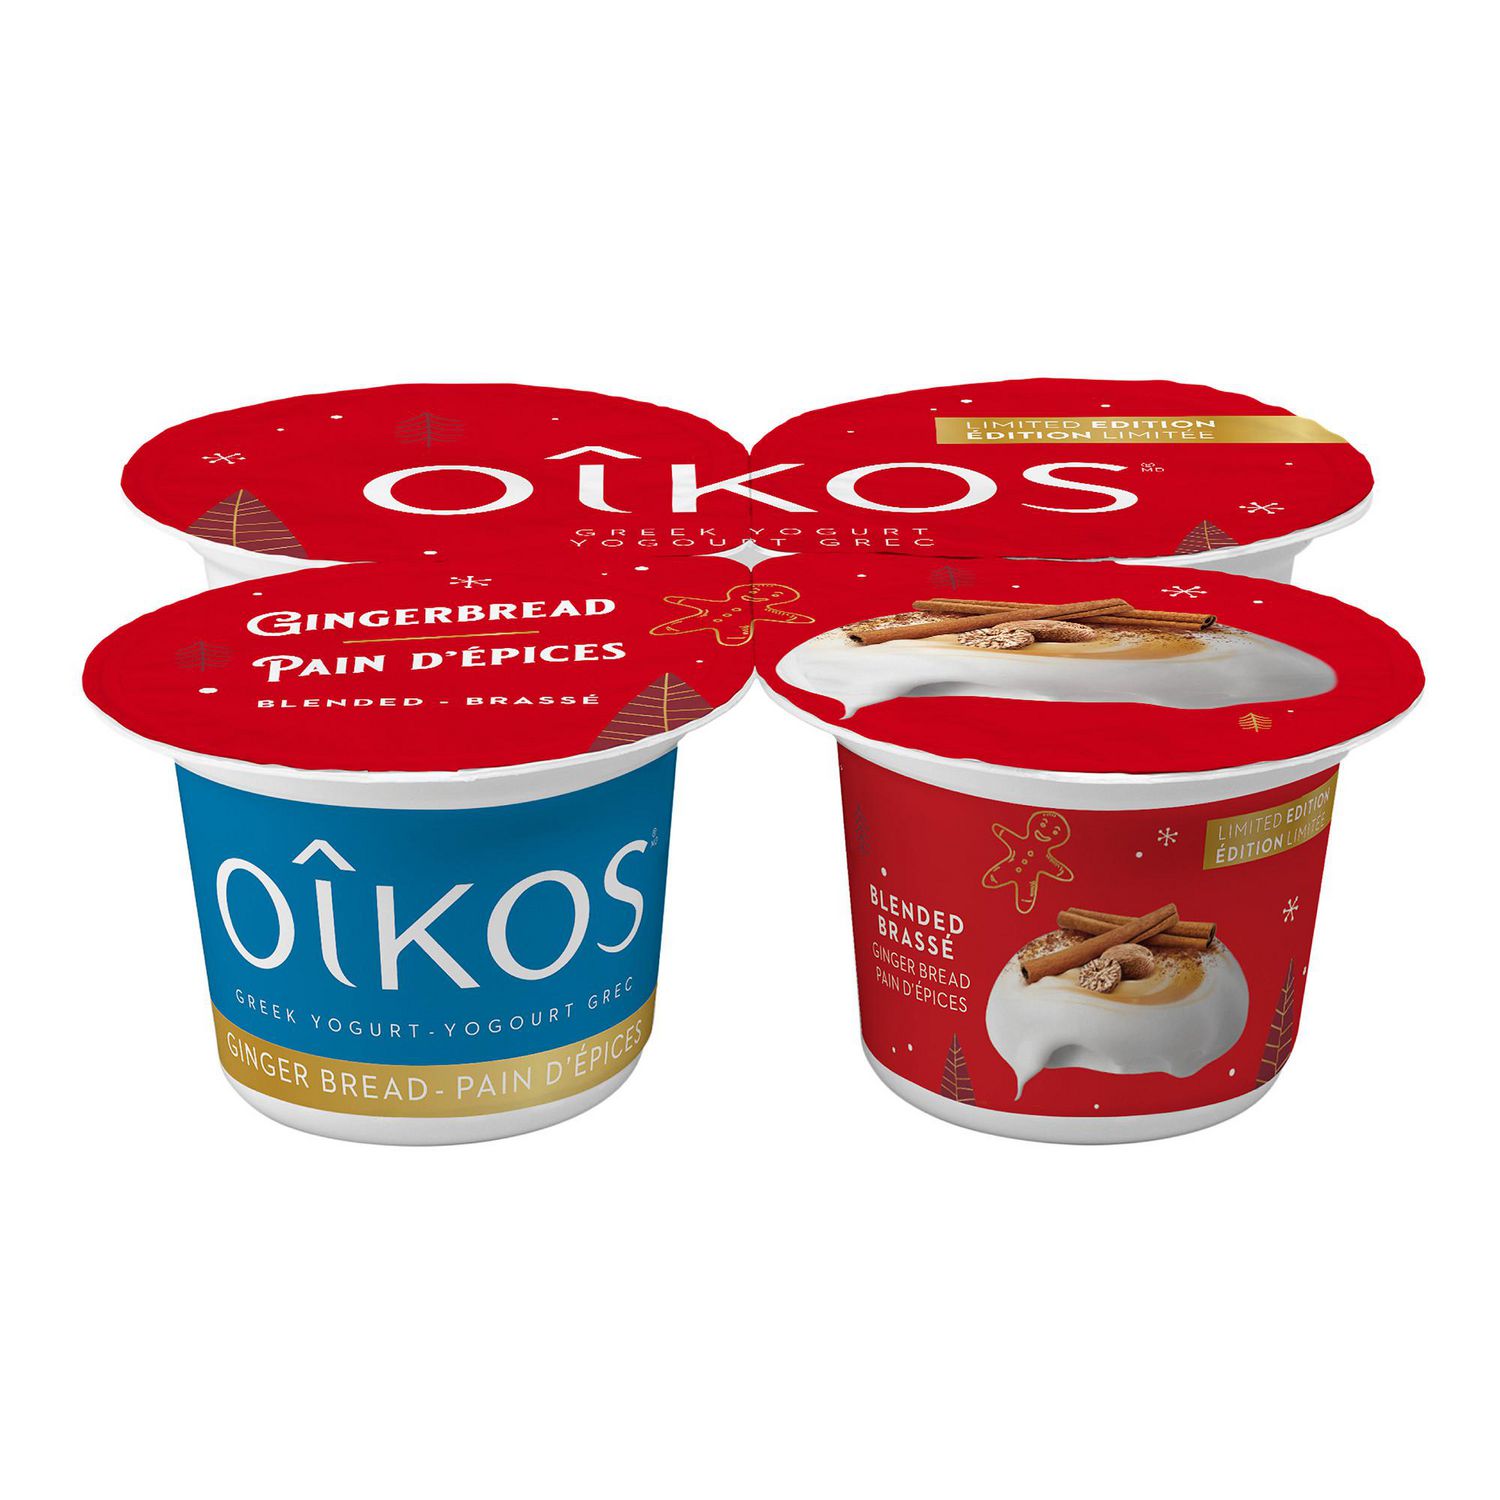 OIKOS Greek Yogurt, Limited Edition, Pink Lemonade Flavour, 4x100g | Walmart Canada